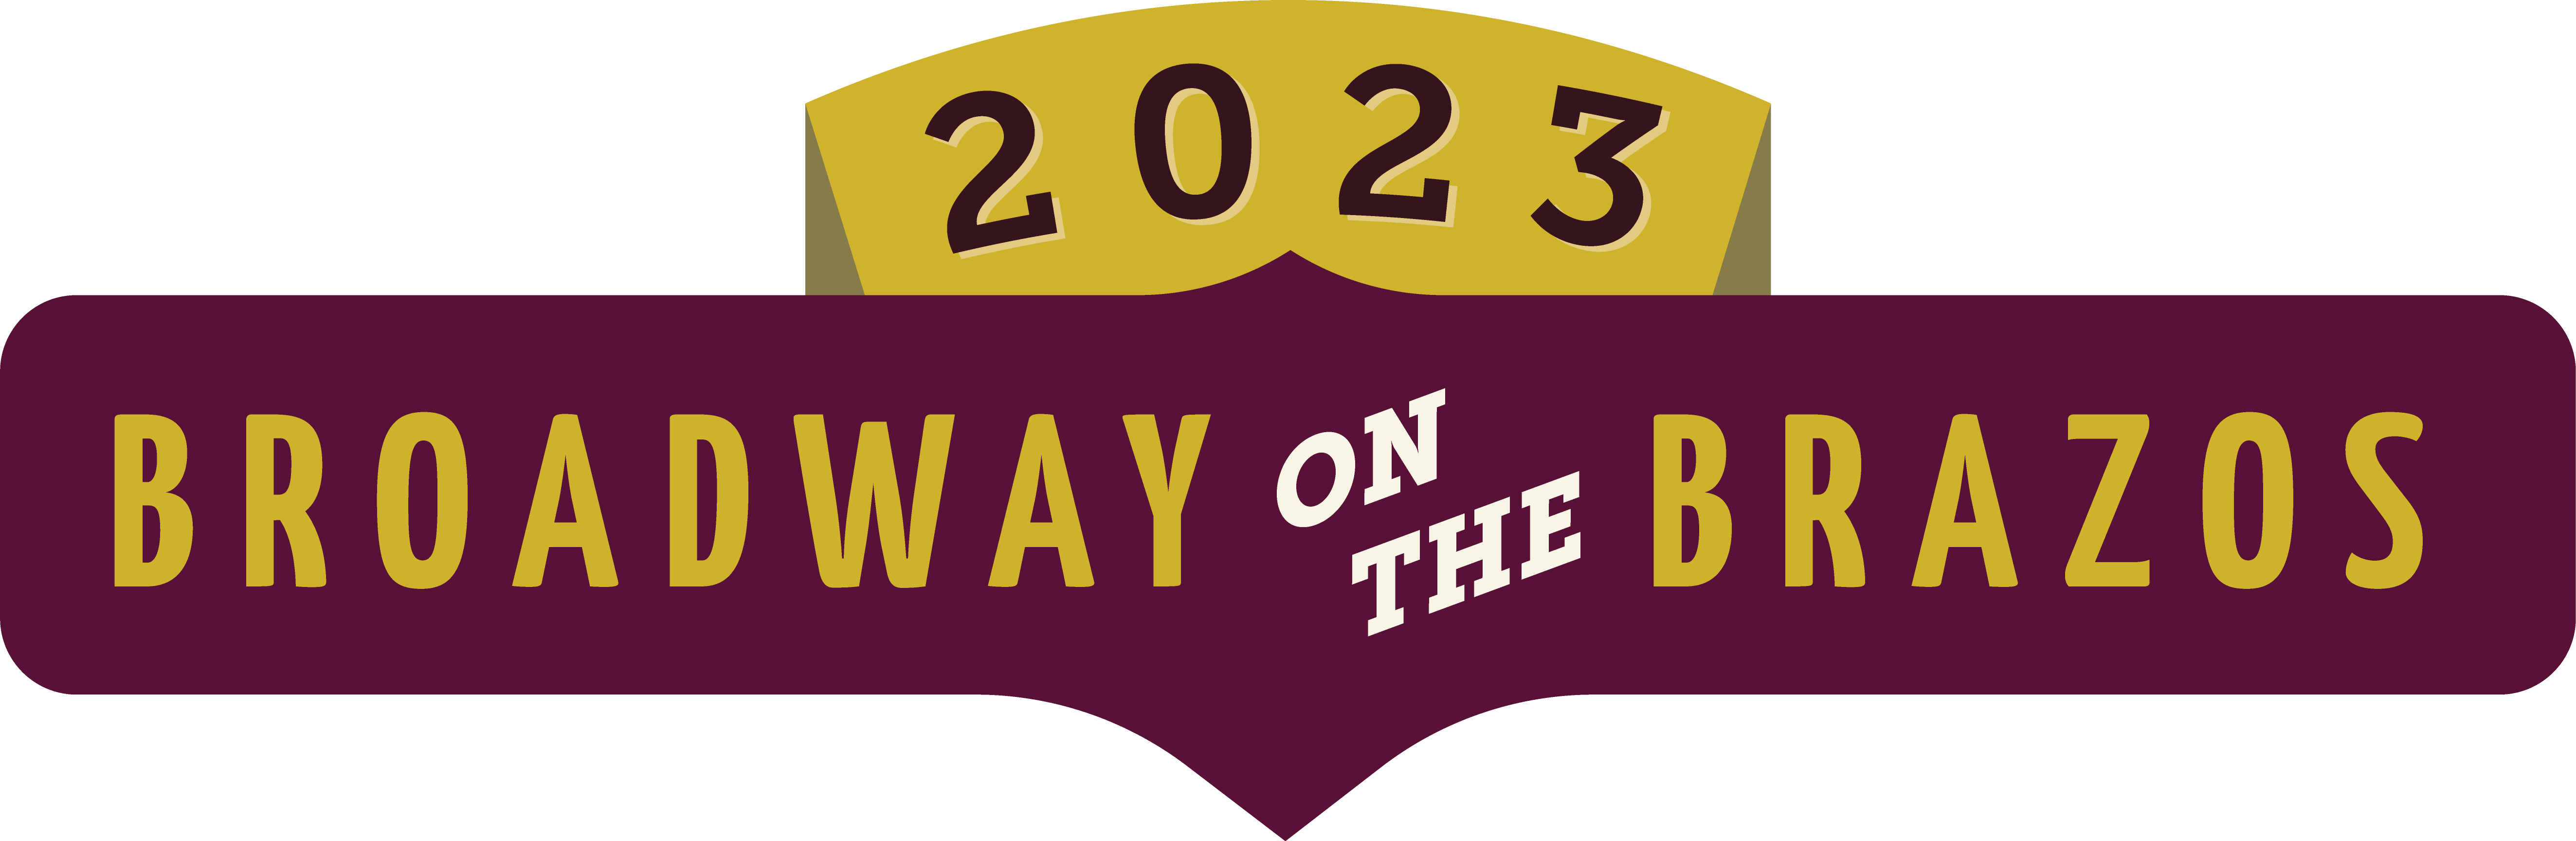 2021 Broadway on the Brazos